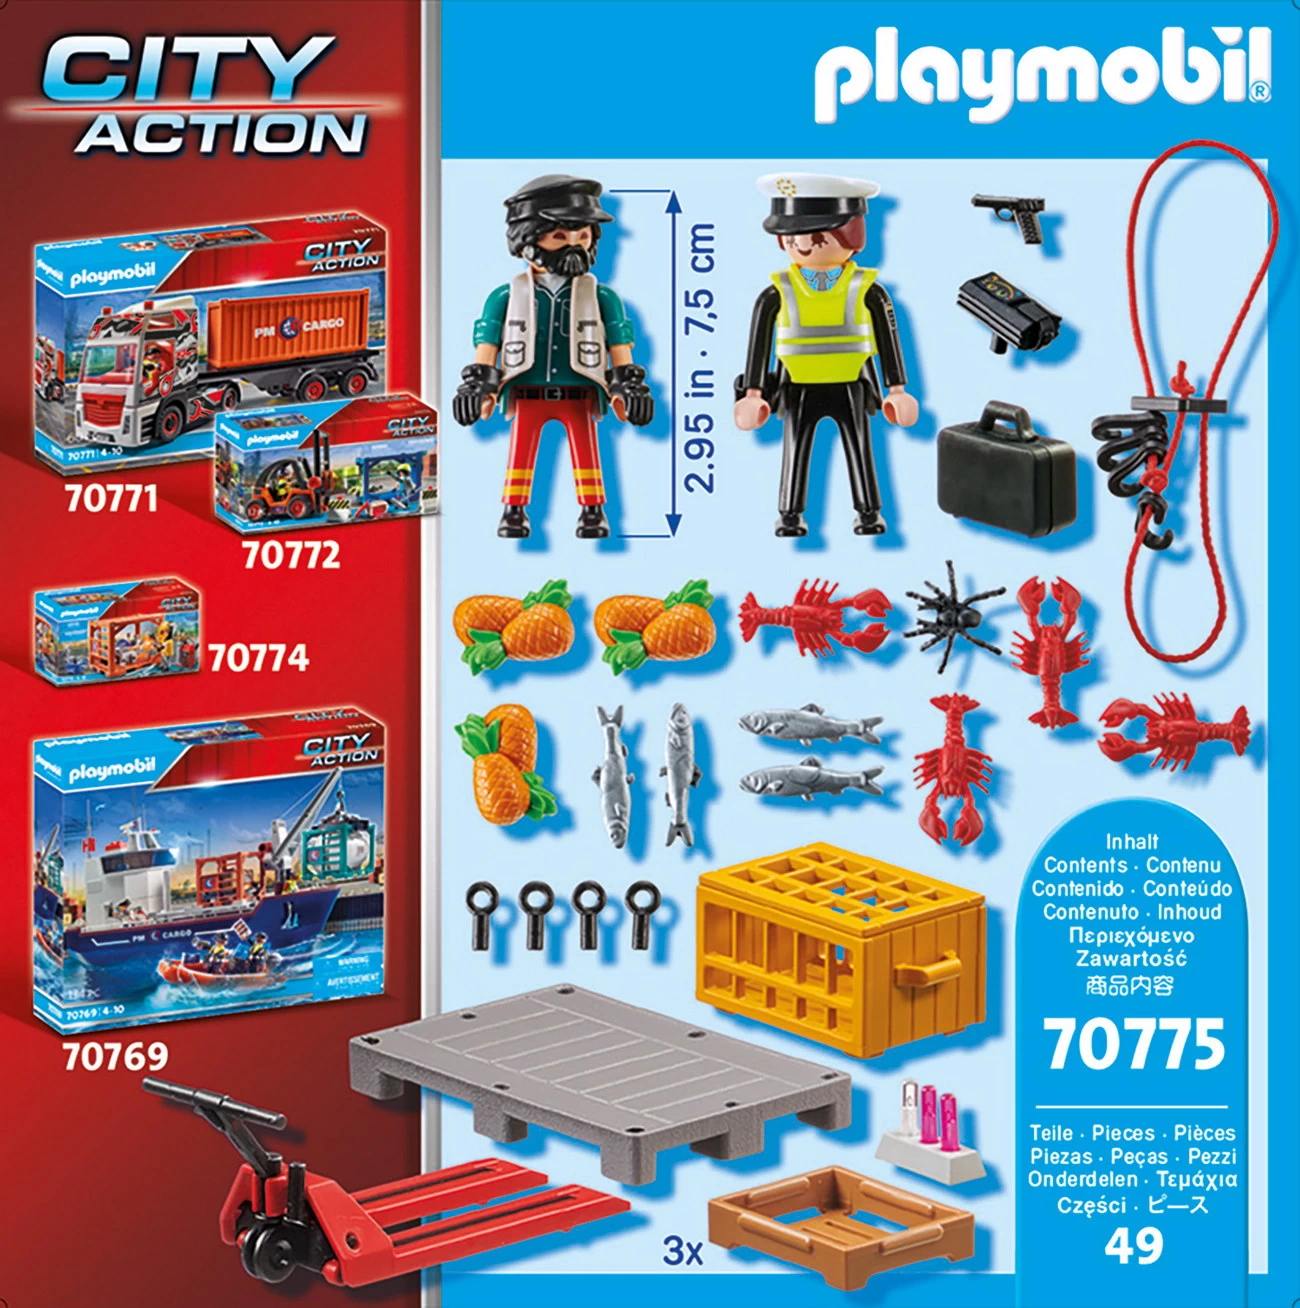 Playmobil 70775 - Zollkontrolle - City Action